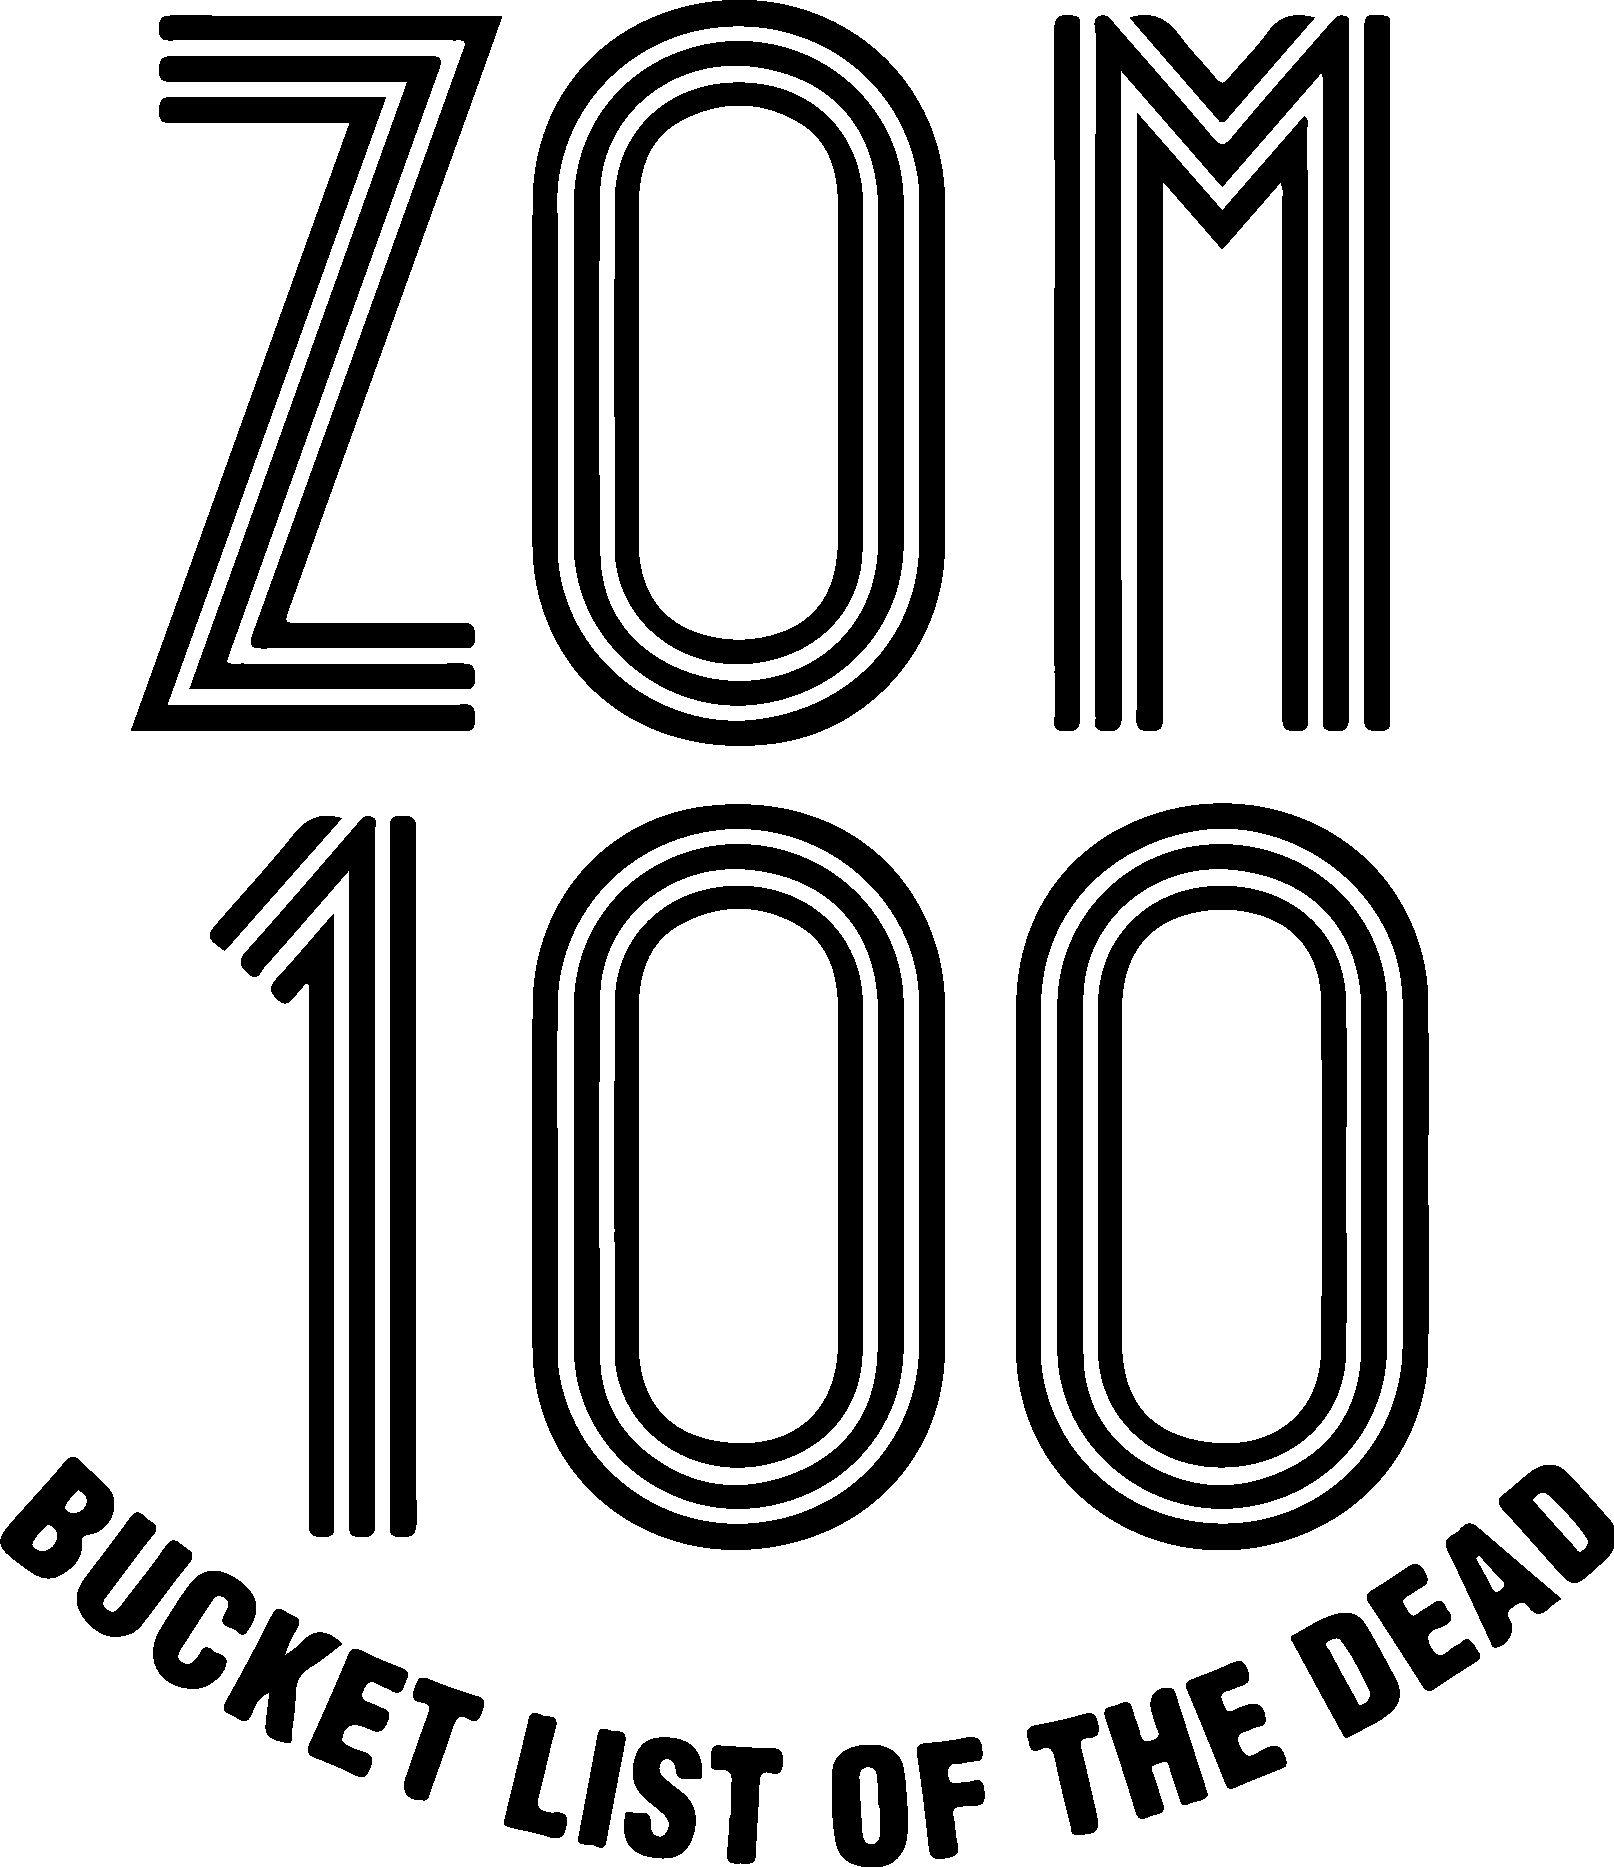 File:100 Thieves logo.svg - Wikipedia